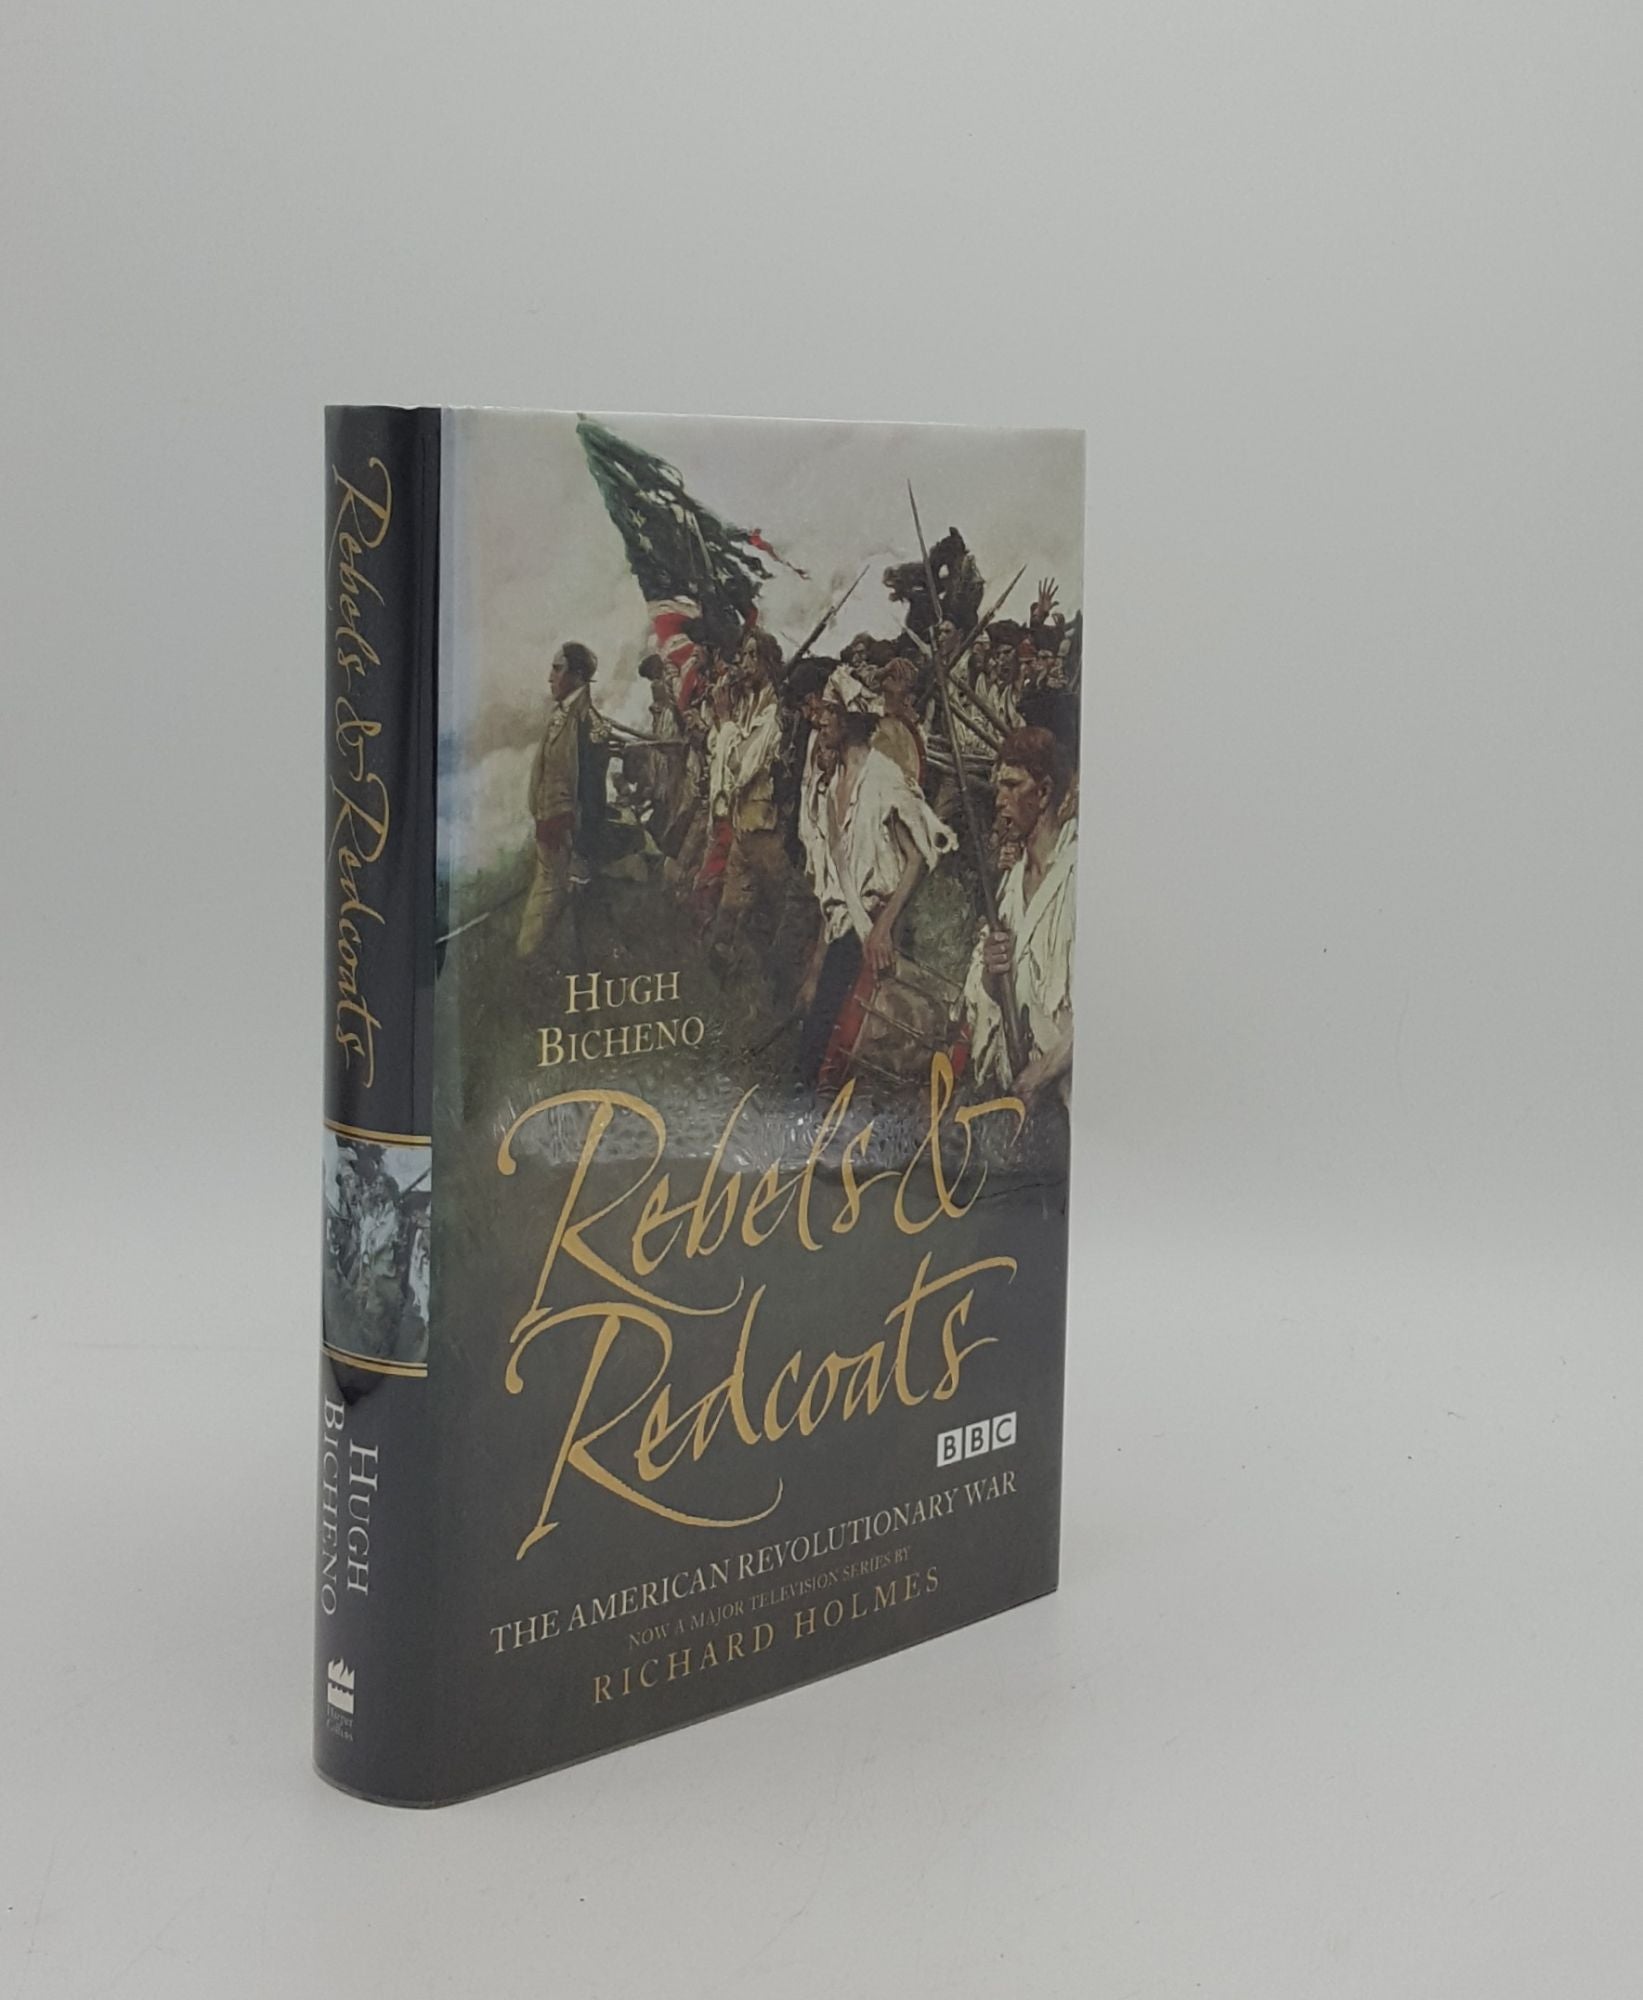 BICHENO Hugh - Rebels and Redcoats the American Revolutionary War